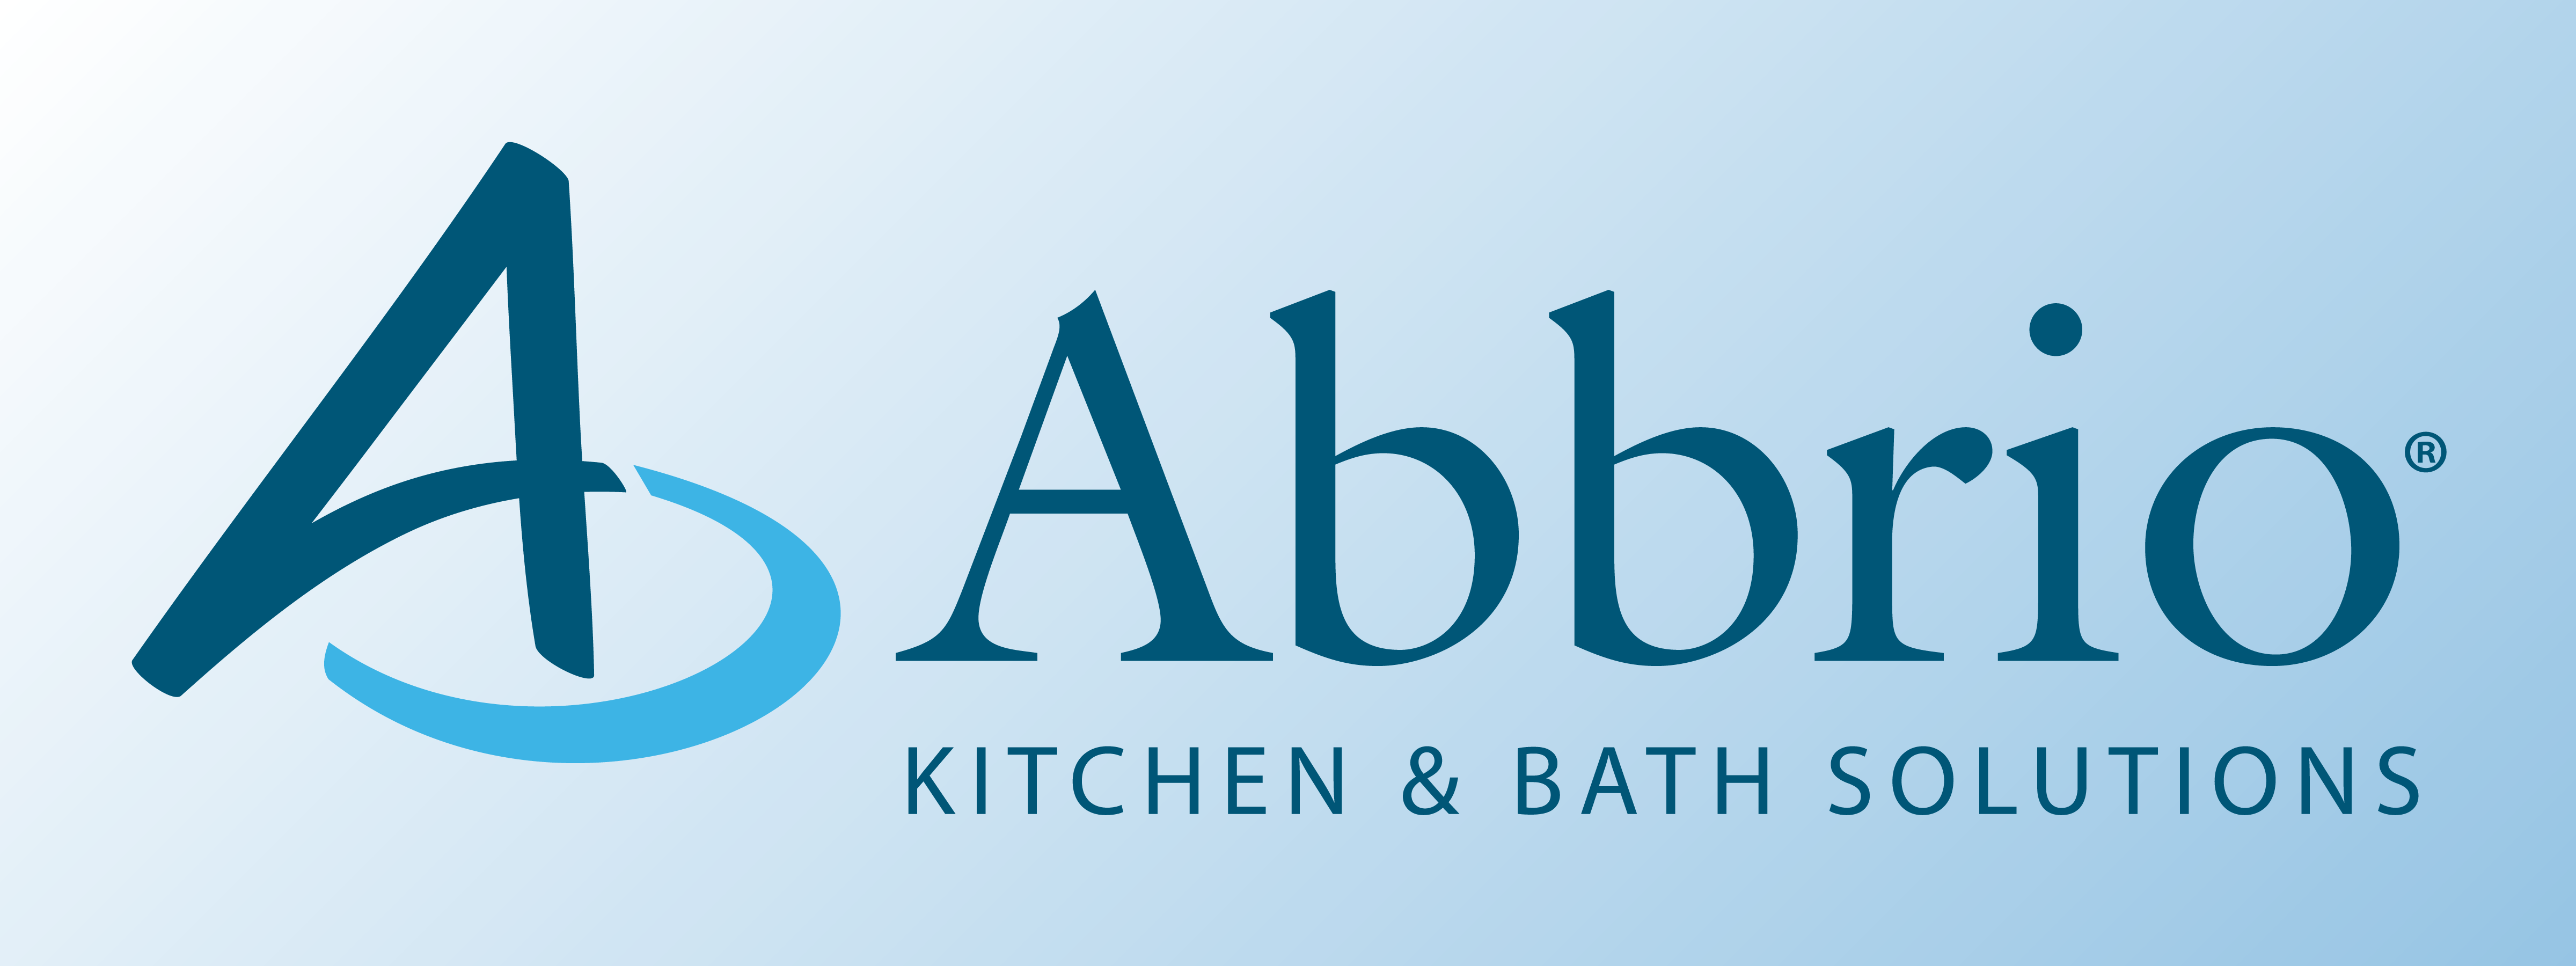 abbrio kitchen and bath solutions